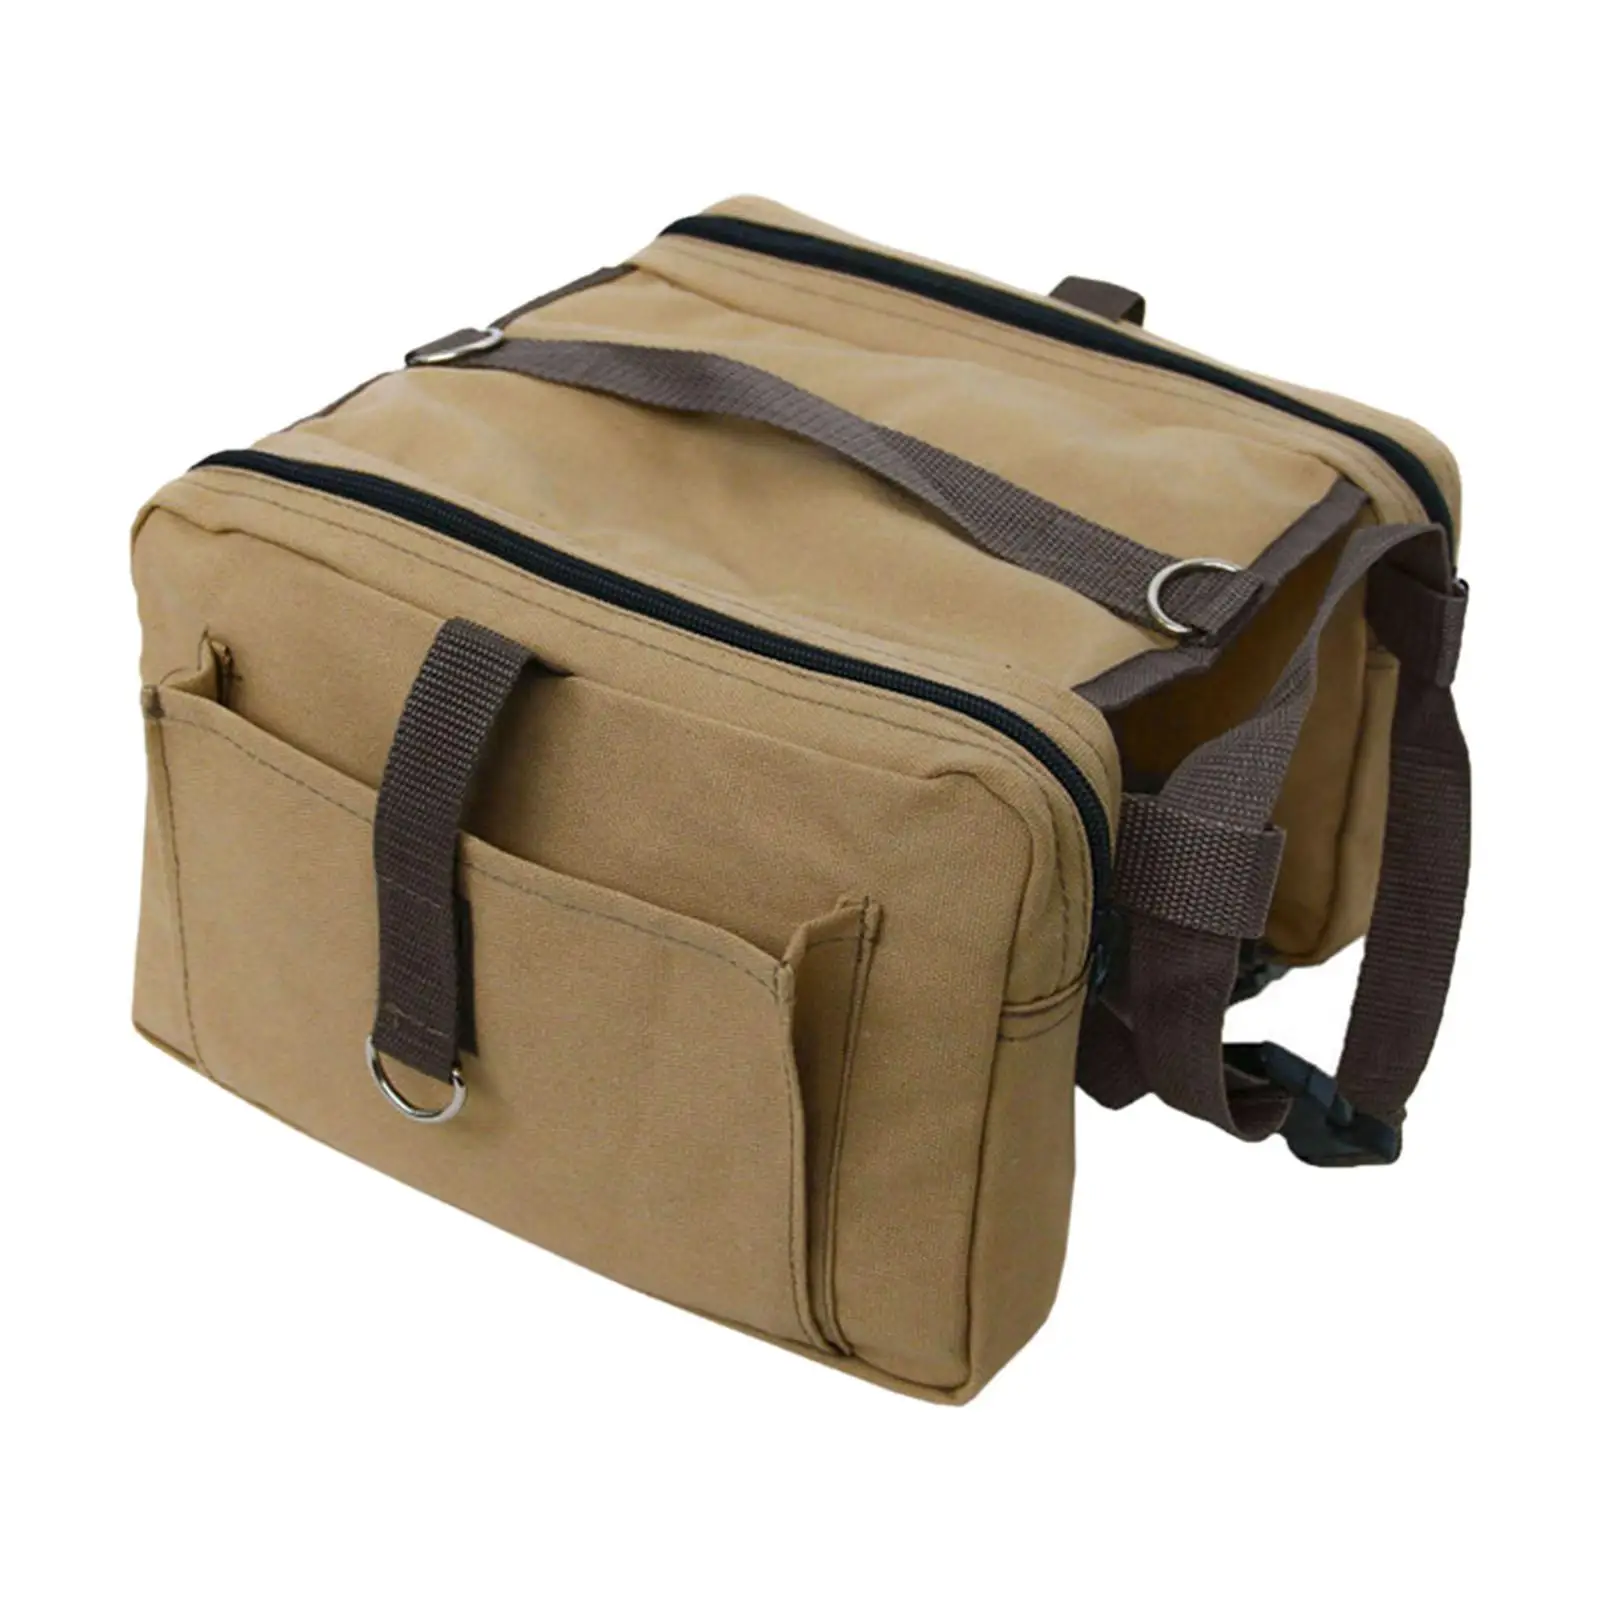 Dog Hiking Backpack Durable Camping Saddle Bag Saddlebag with Side Pockets